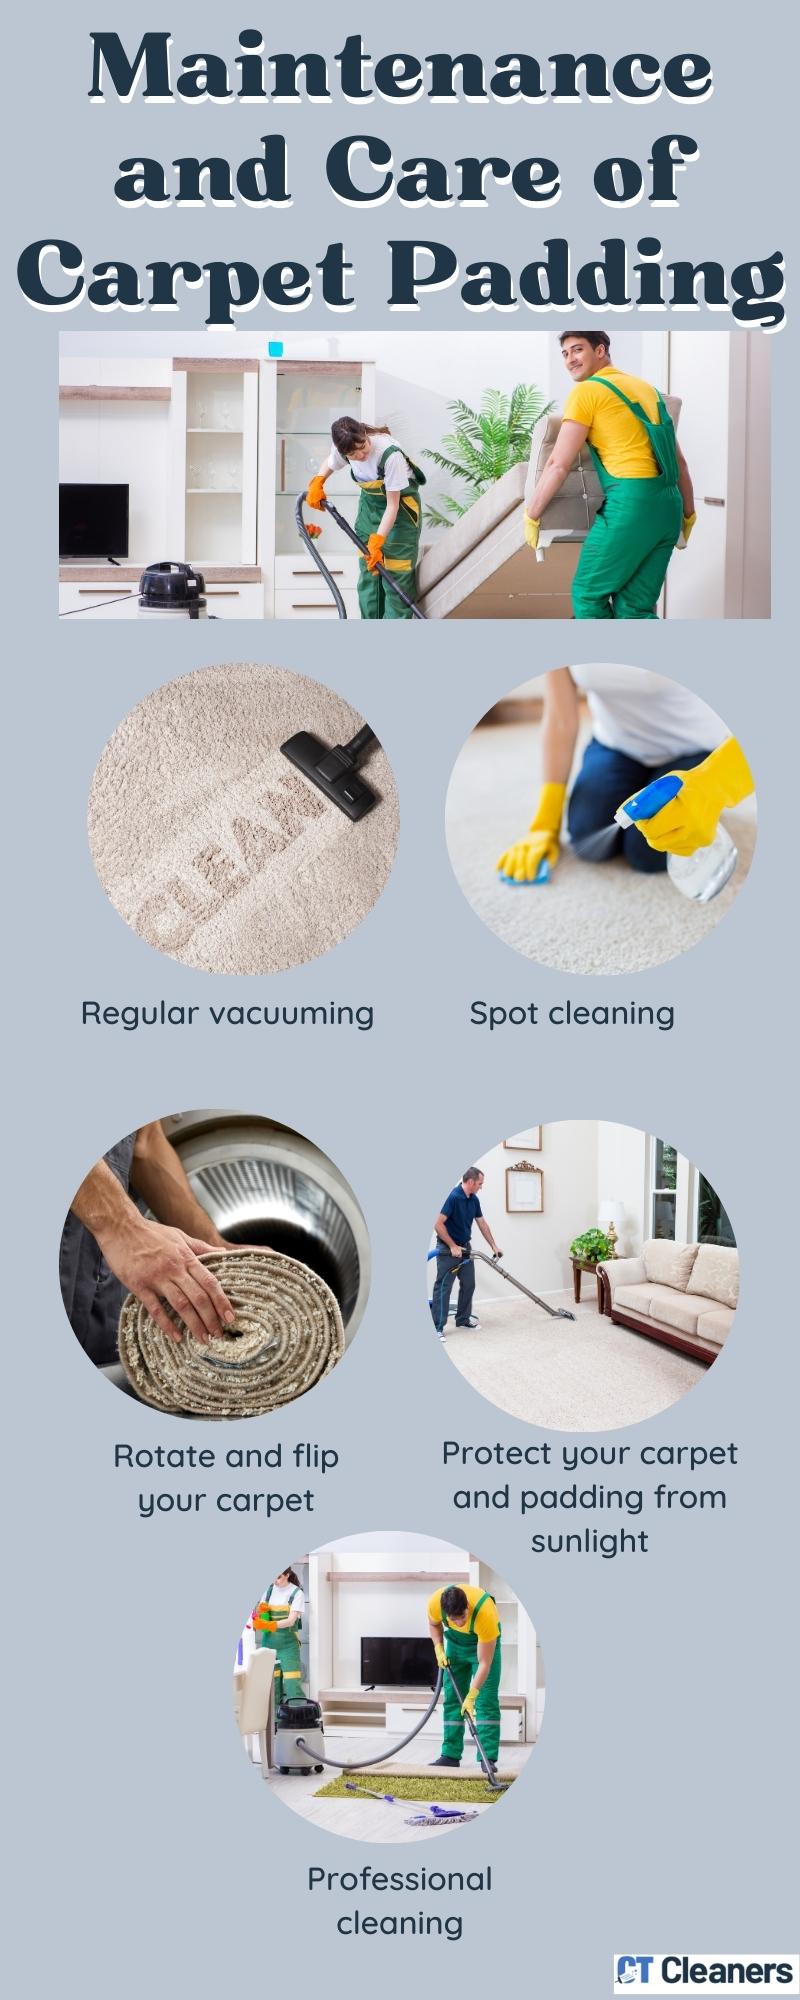 Maintenance and Care of Carpet Padding